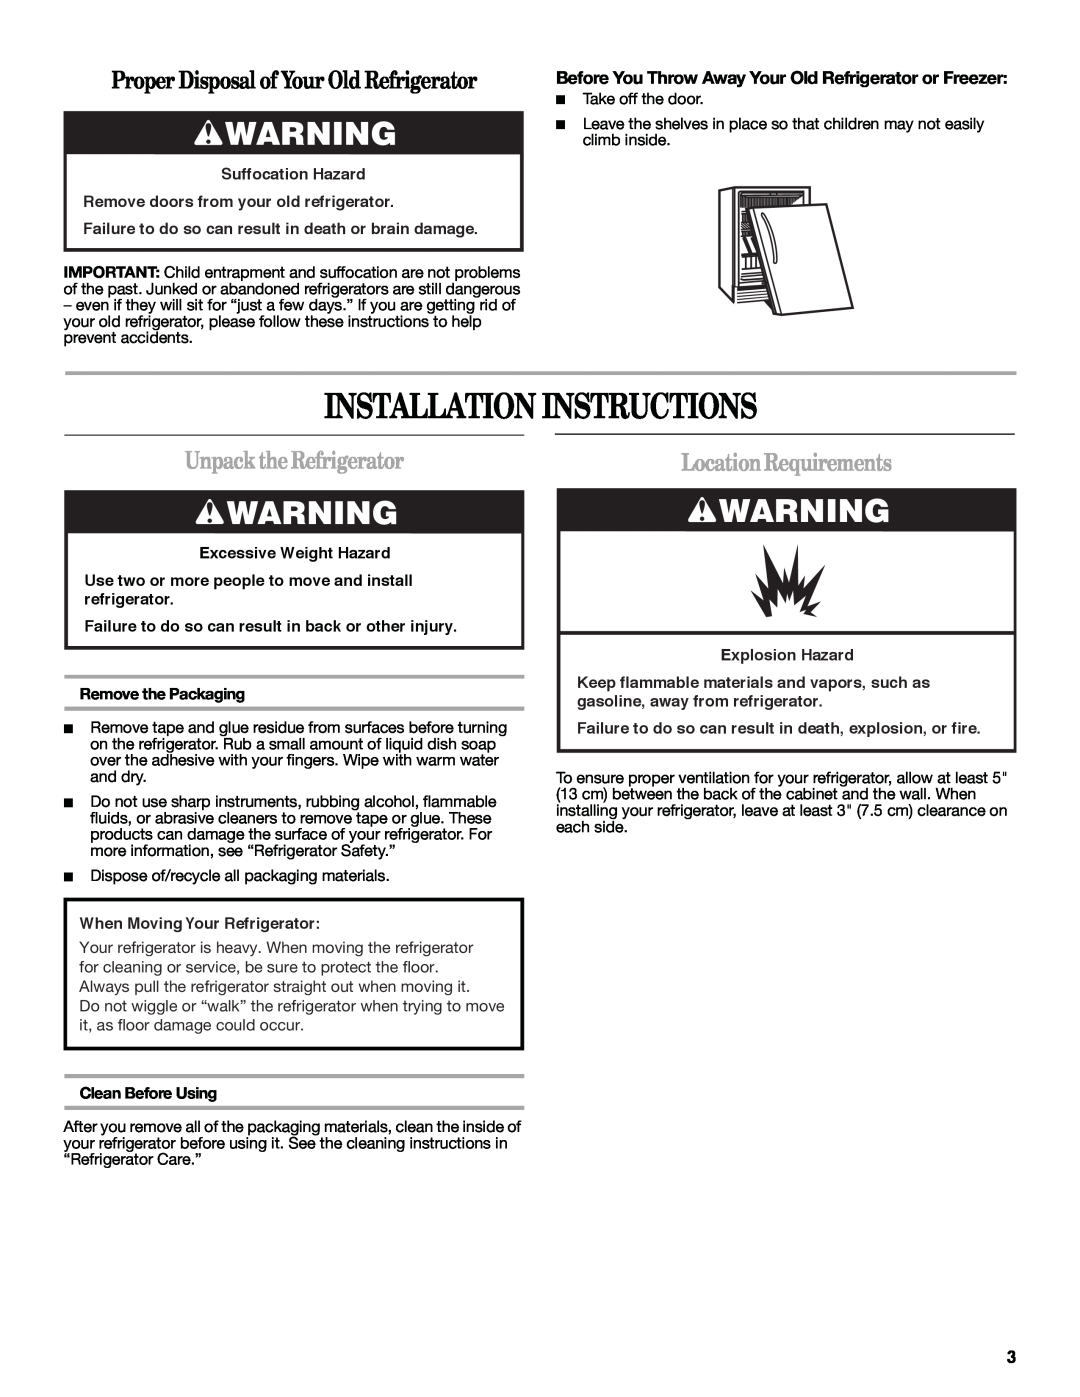 Whirlpool WAR349BSL manual Installation Instructions, ProperDisposalofYourOldRefrigerator, UnpacktheRefrigerator 